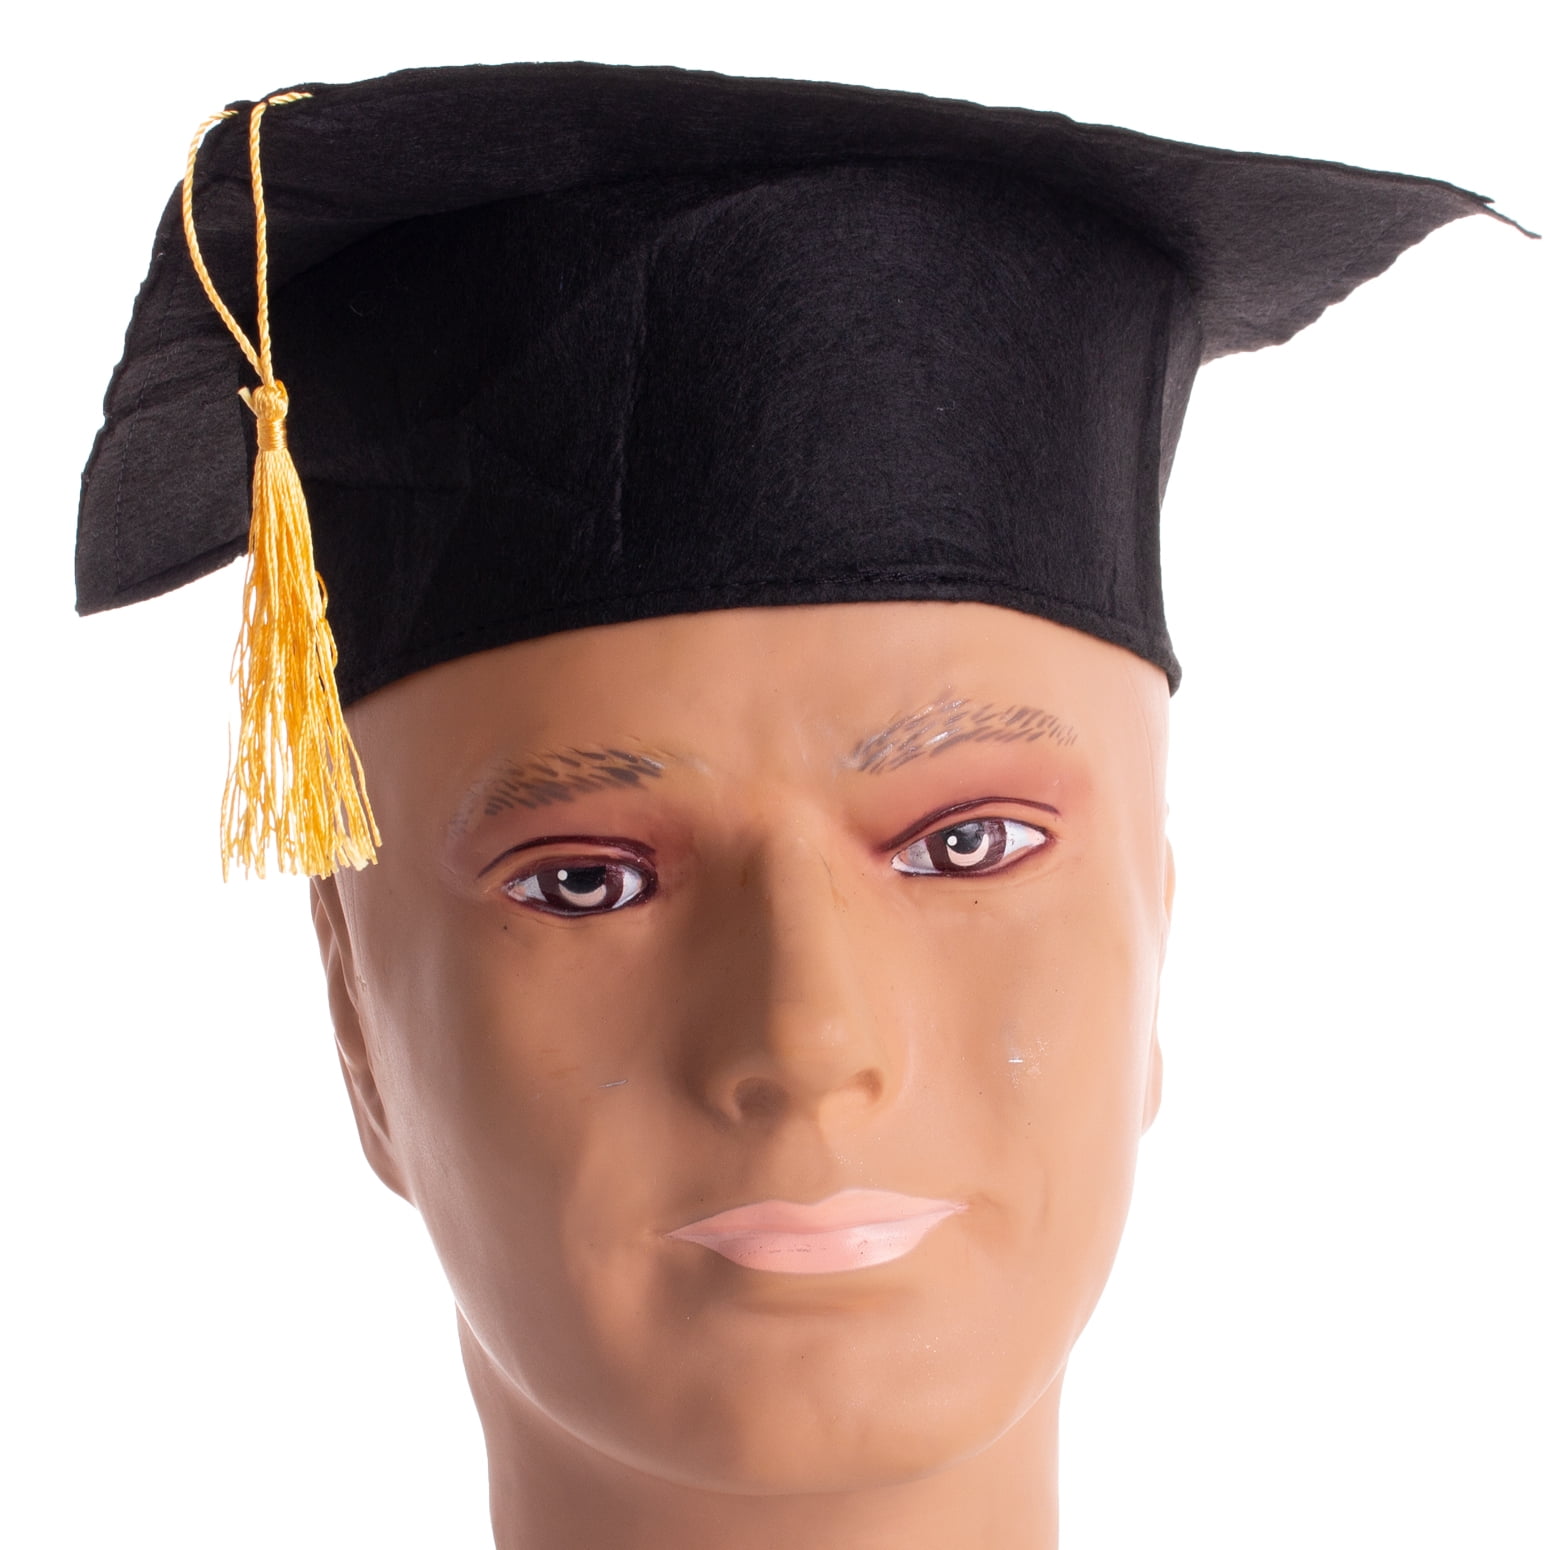 US Toy Economy Graduation Caps w/ Tassel Hats, Black, One-Size 8